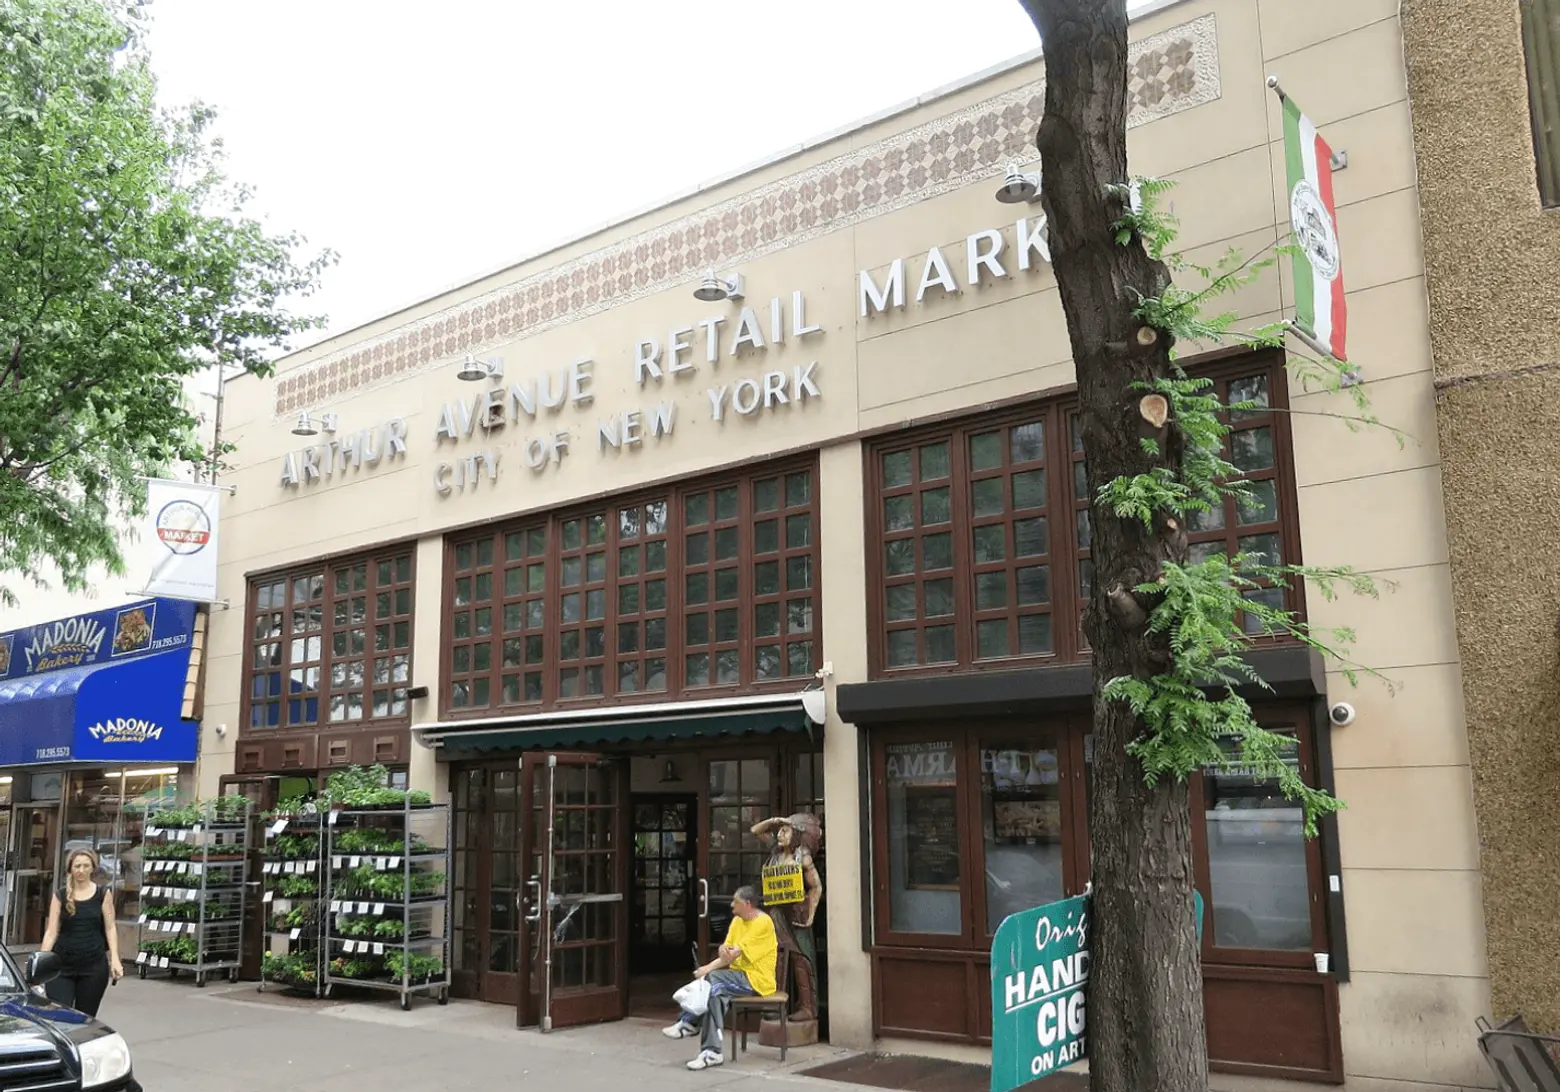 Arthur Avenue Retail Market, Arthur Avenue Bronx, Belmont Bronx, Bronx Little Italy